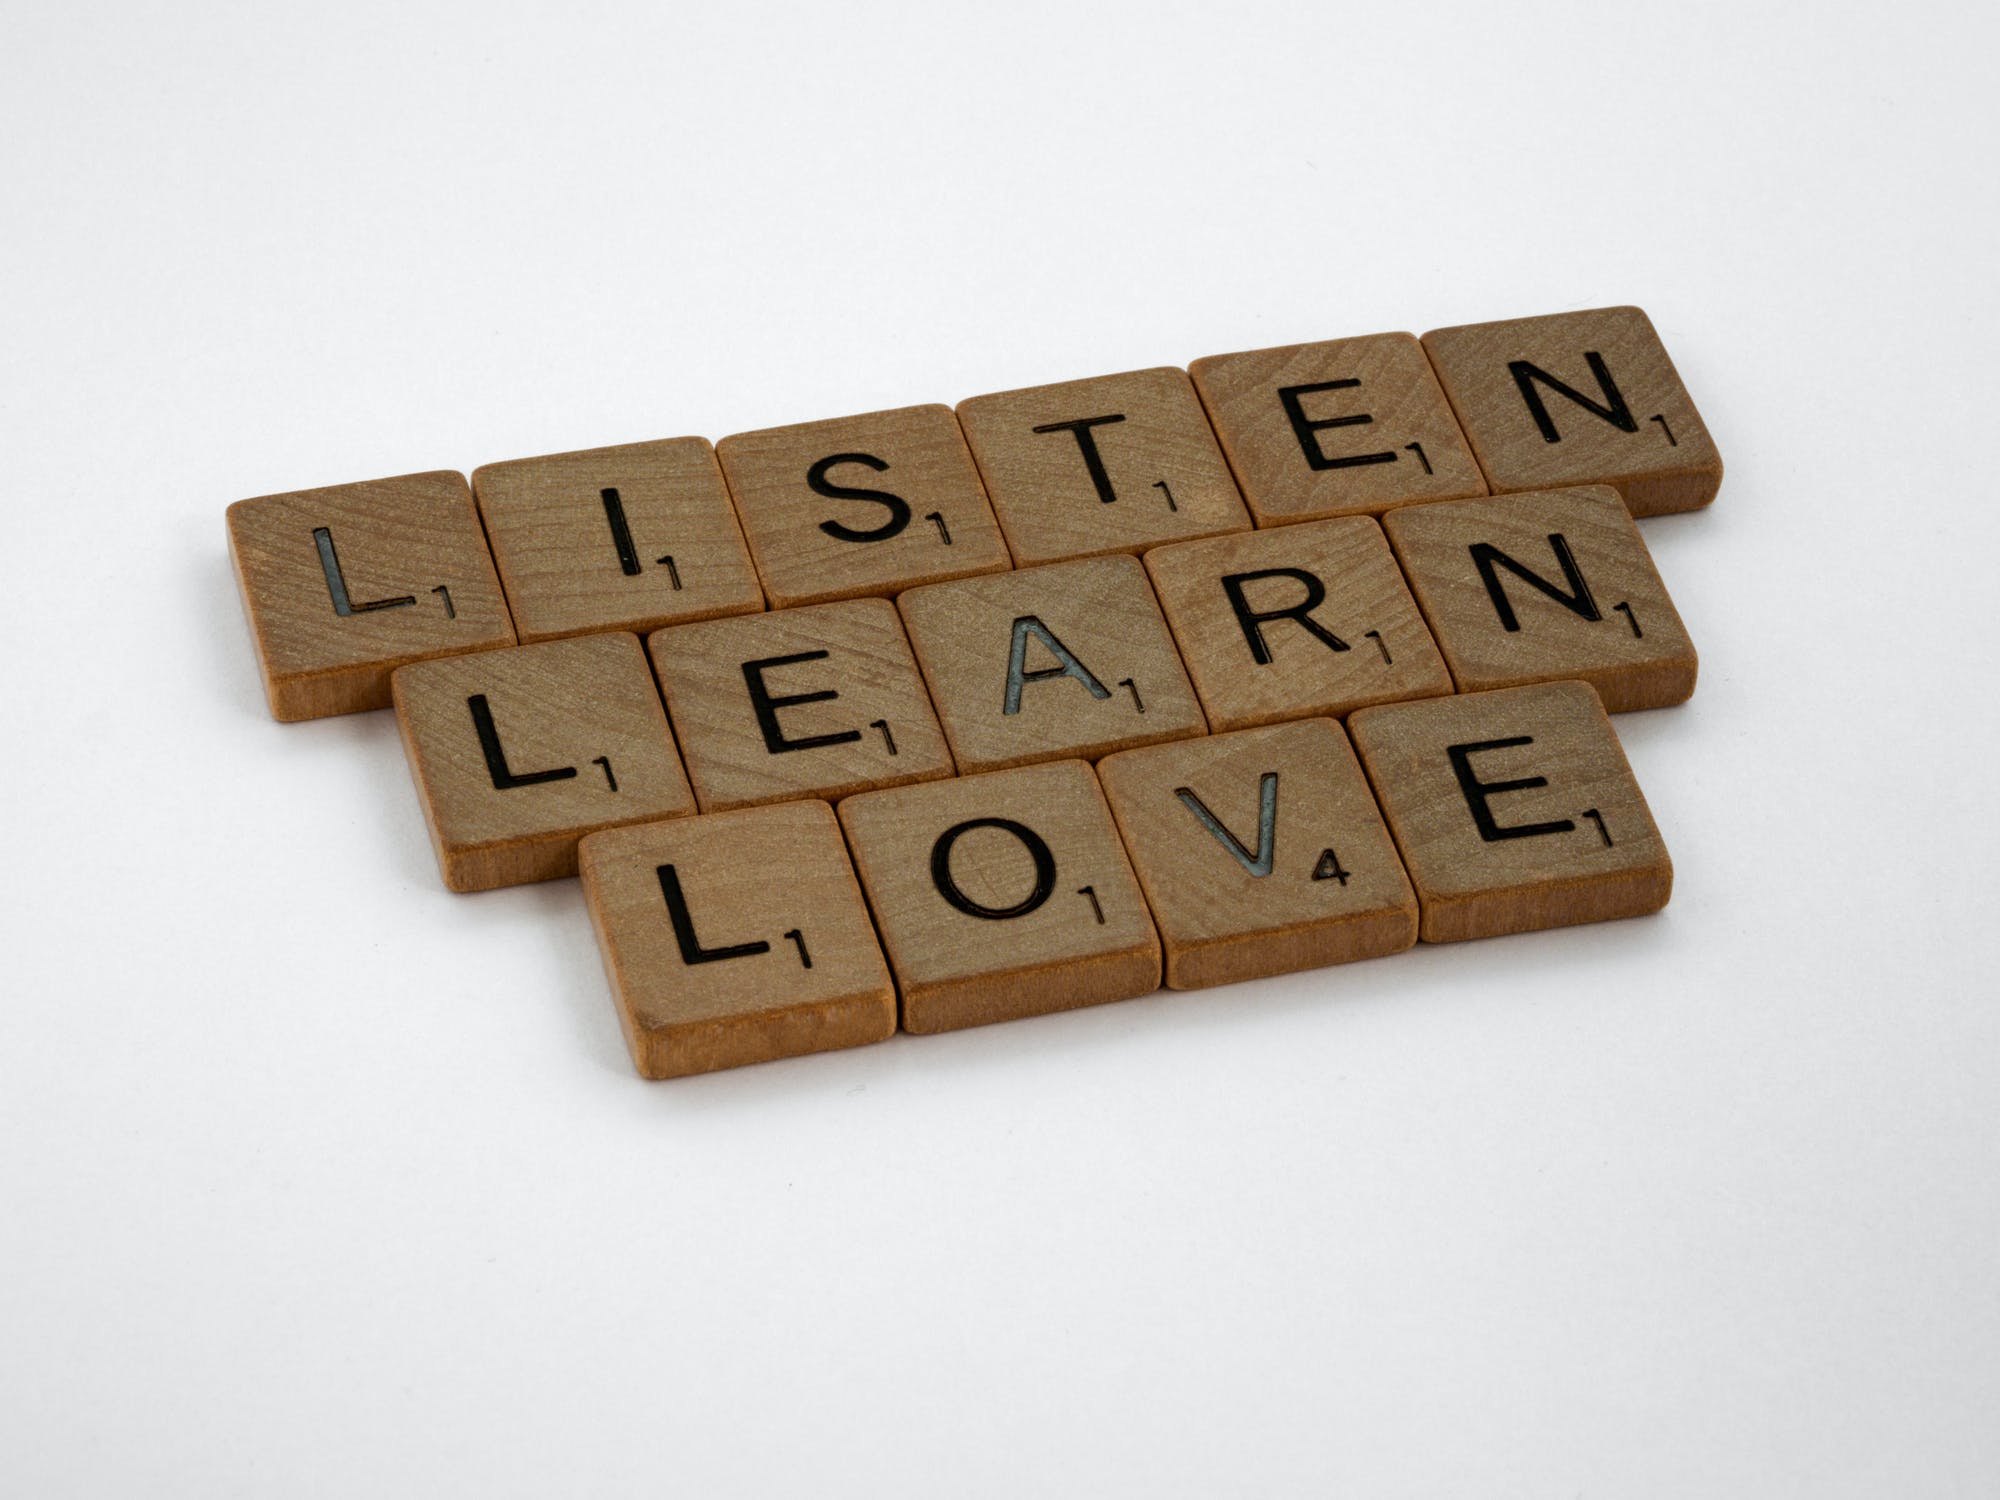 Tiles making up the words listen, learn, love